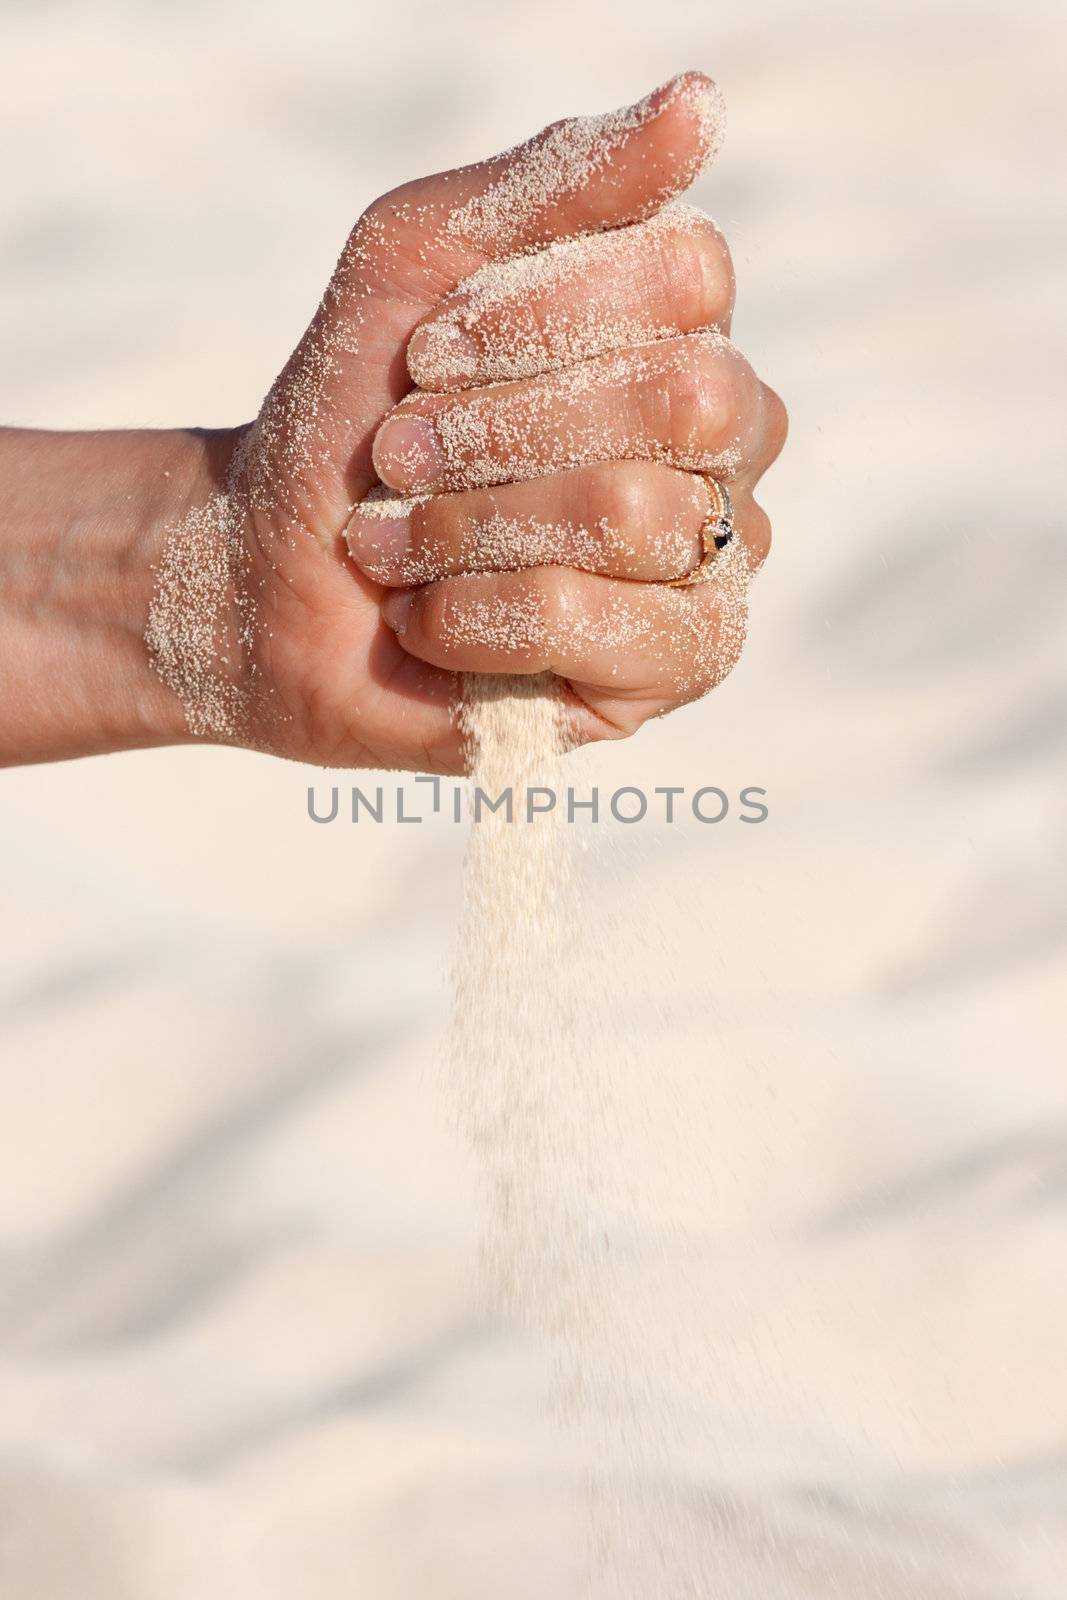 Sand running through hands by dimol